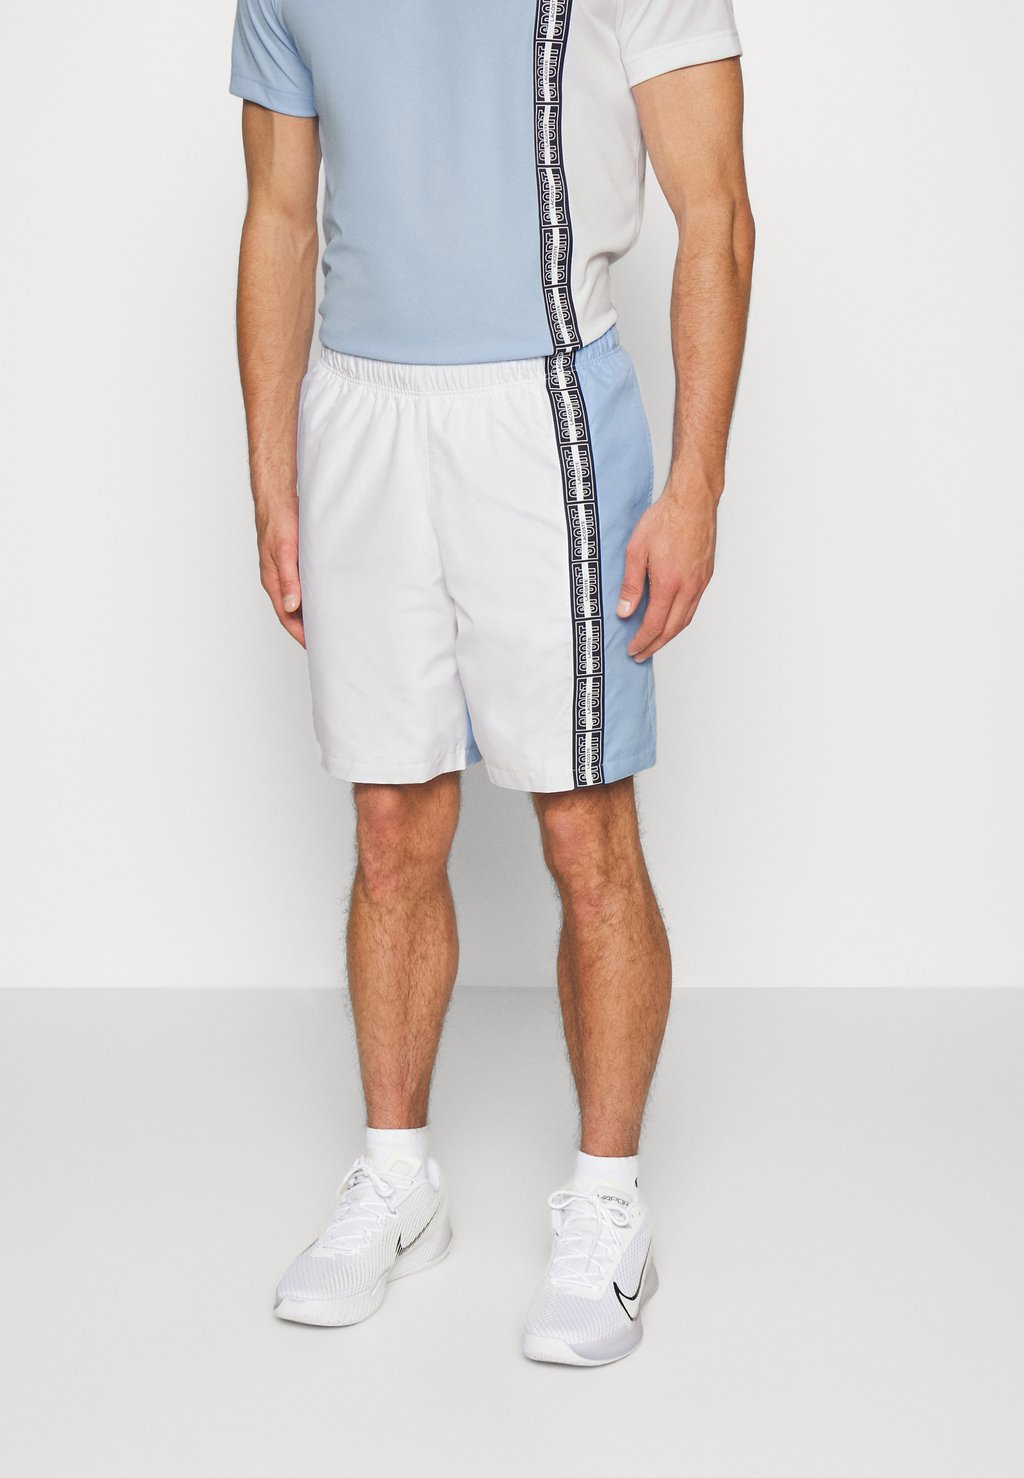 Спортивные шорты Tennis Lacoste, цвет white/navy blue шорты lacoste sport lined tennis shorts цвет navy blue